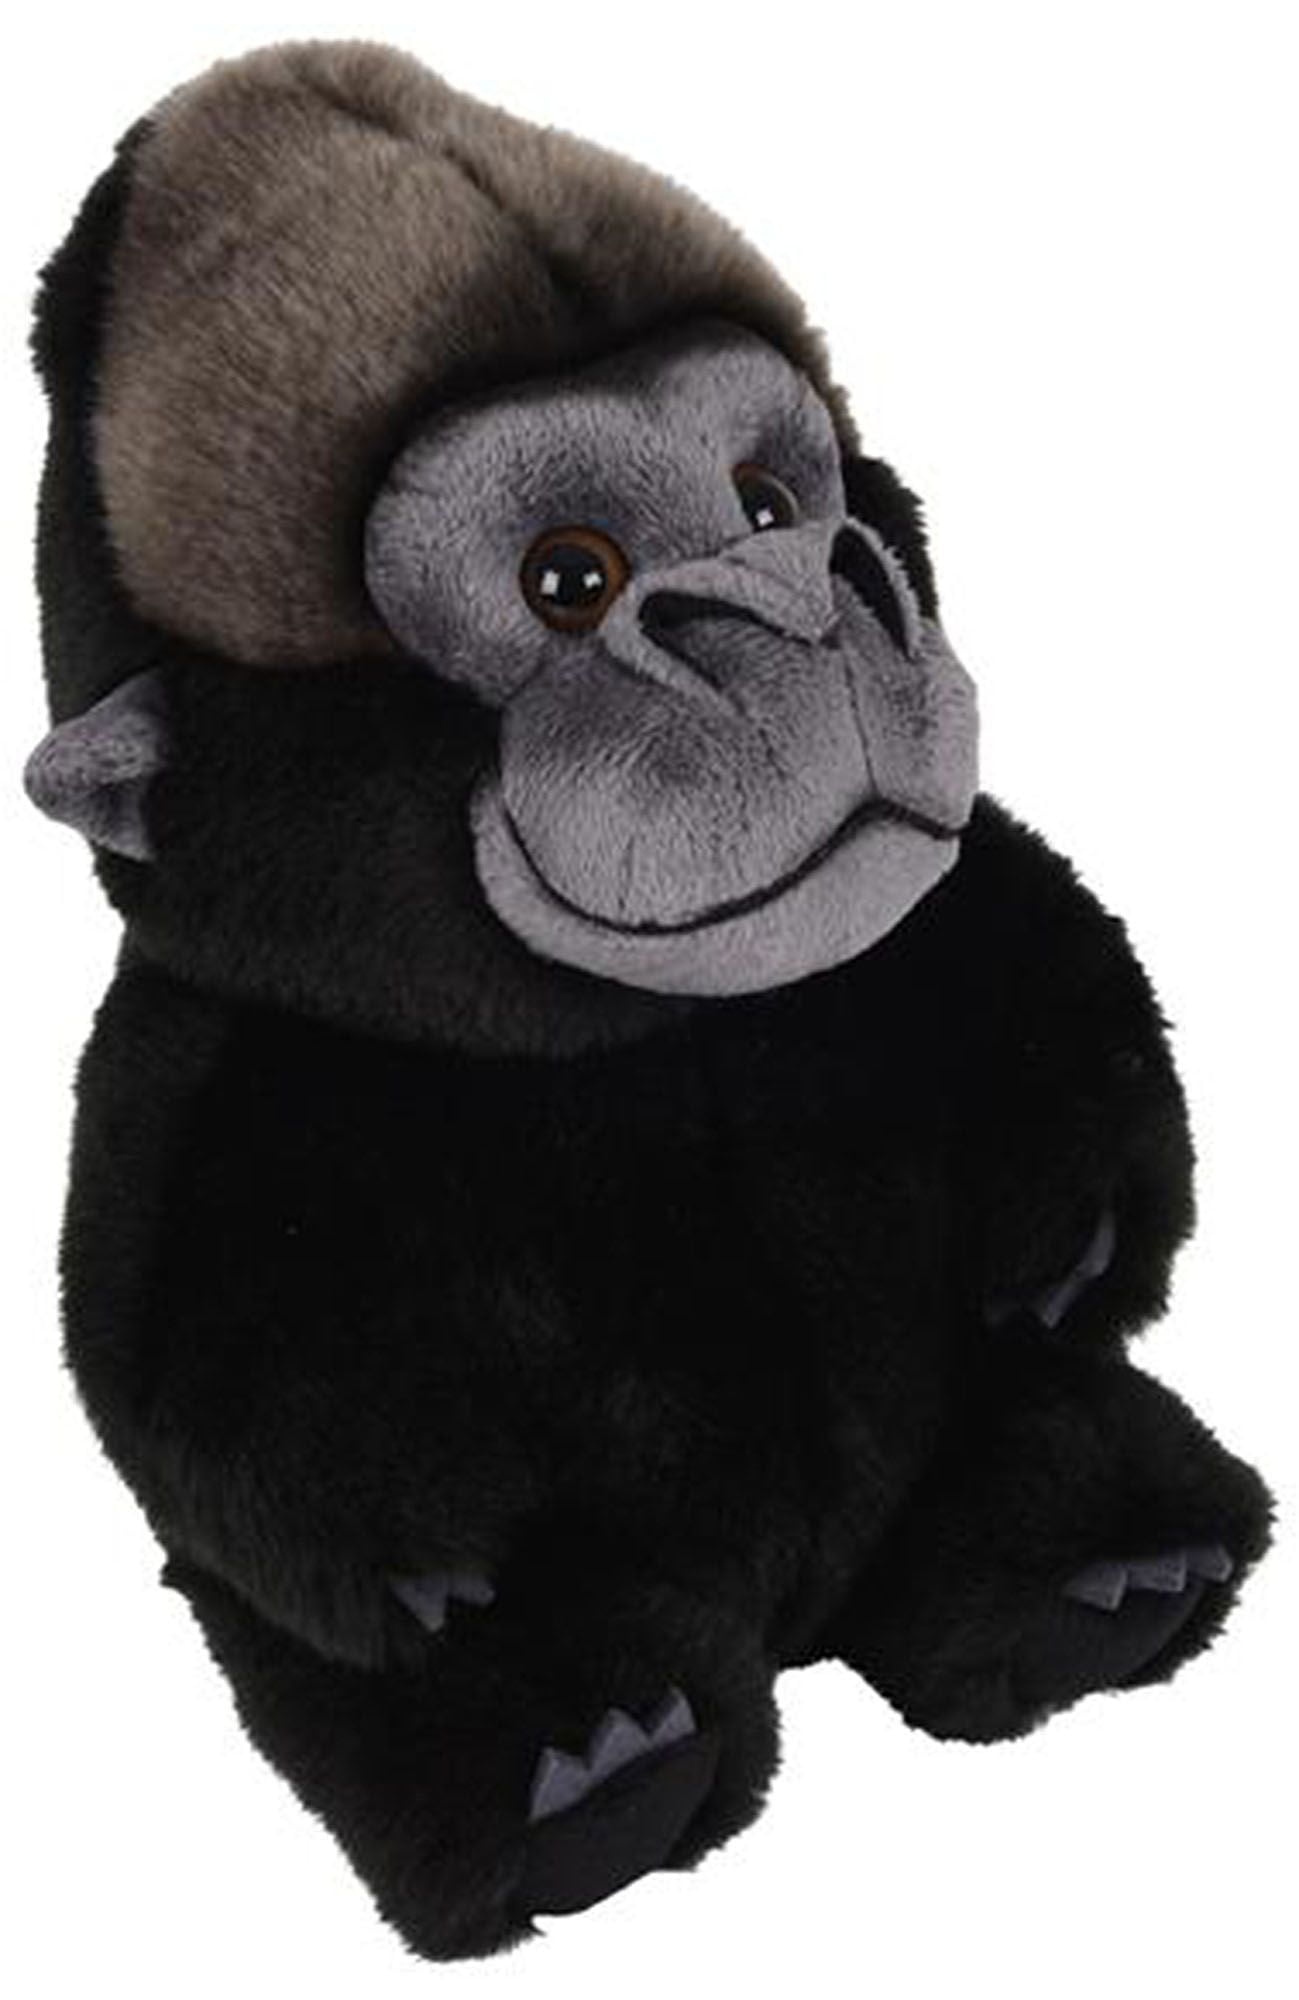 ellen gorilla stuffed animal